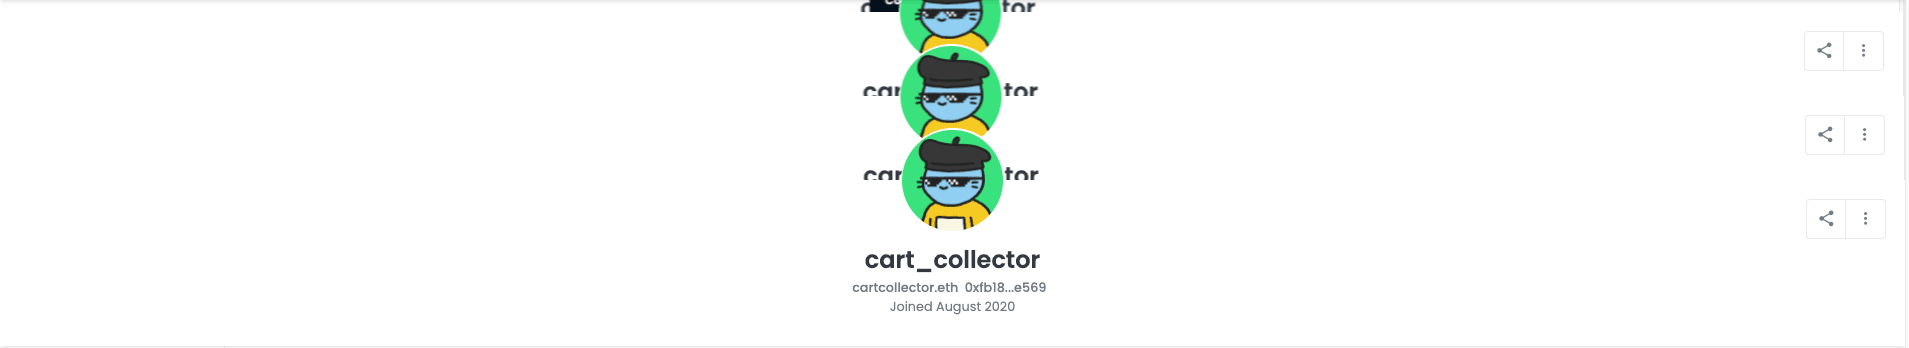 cart_collector banner